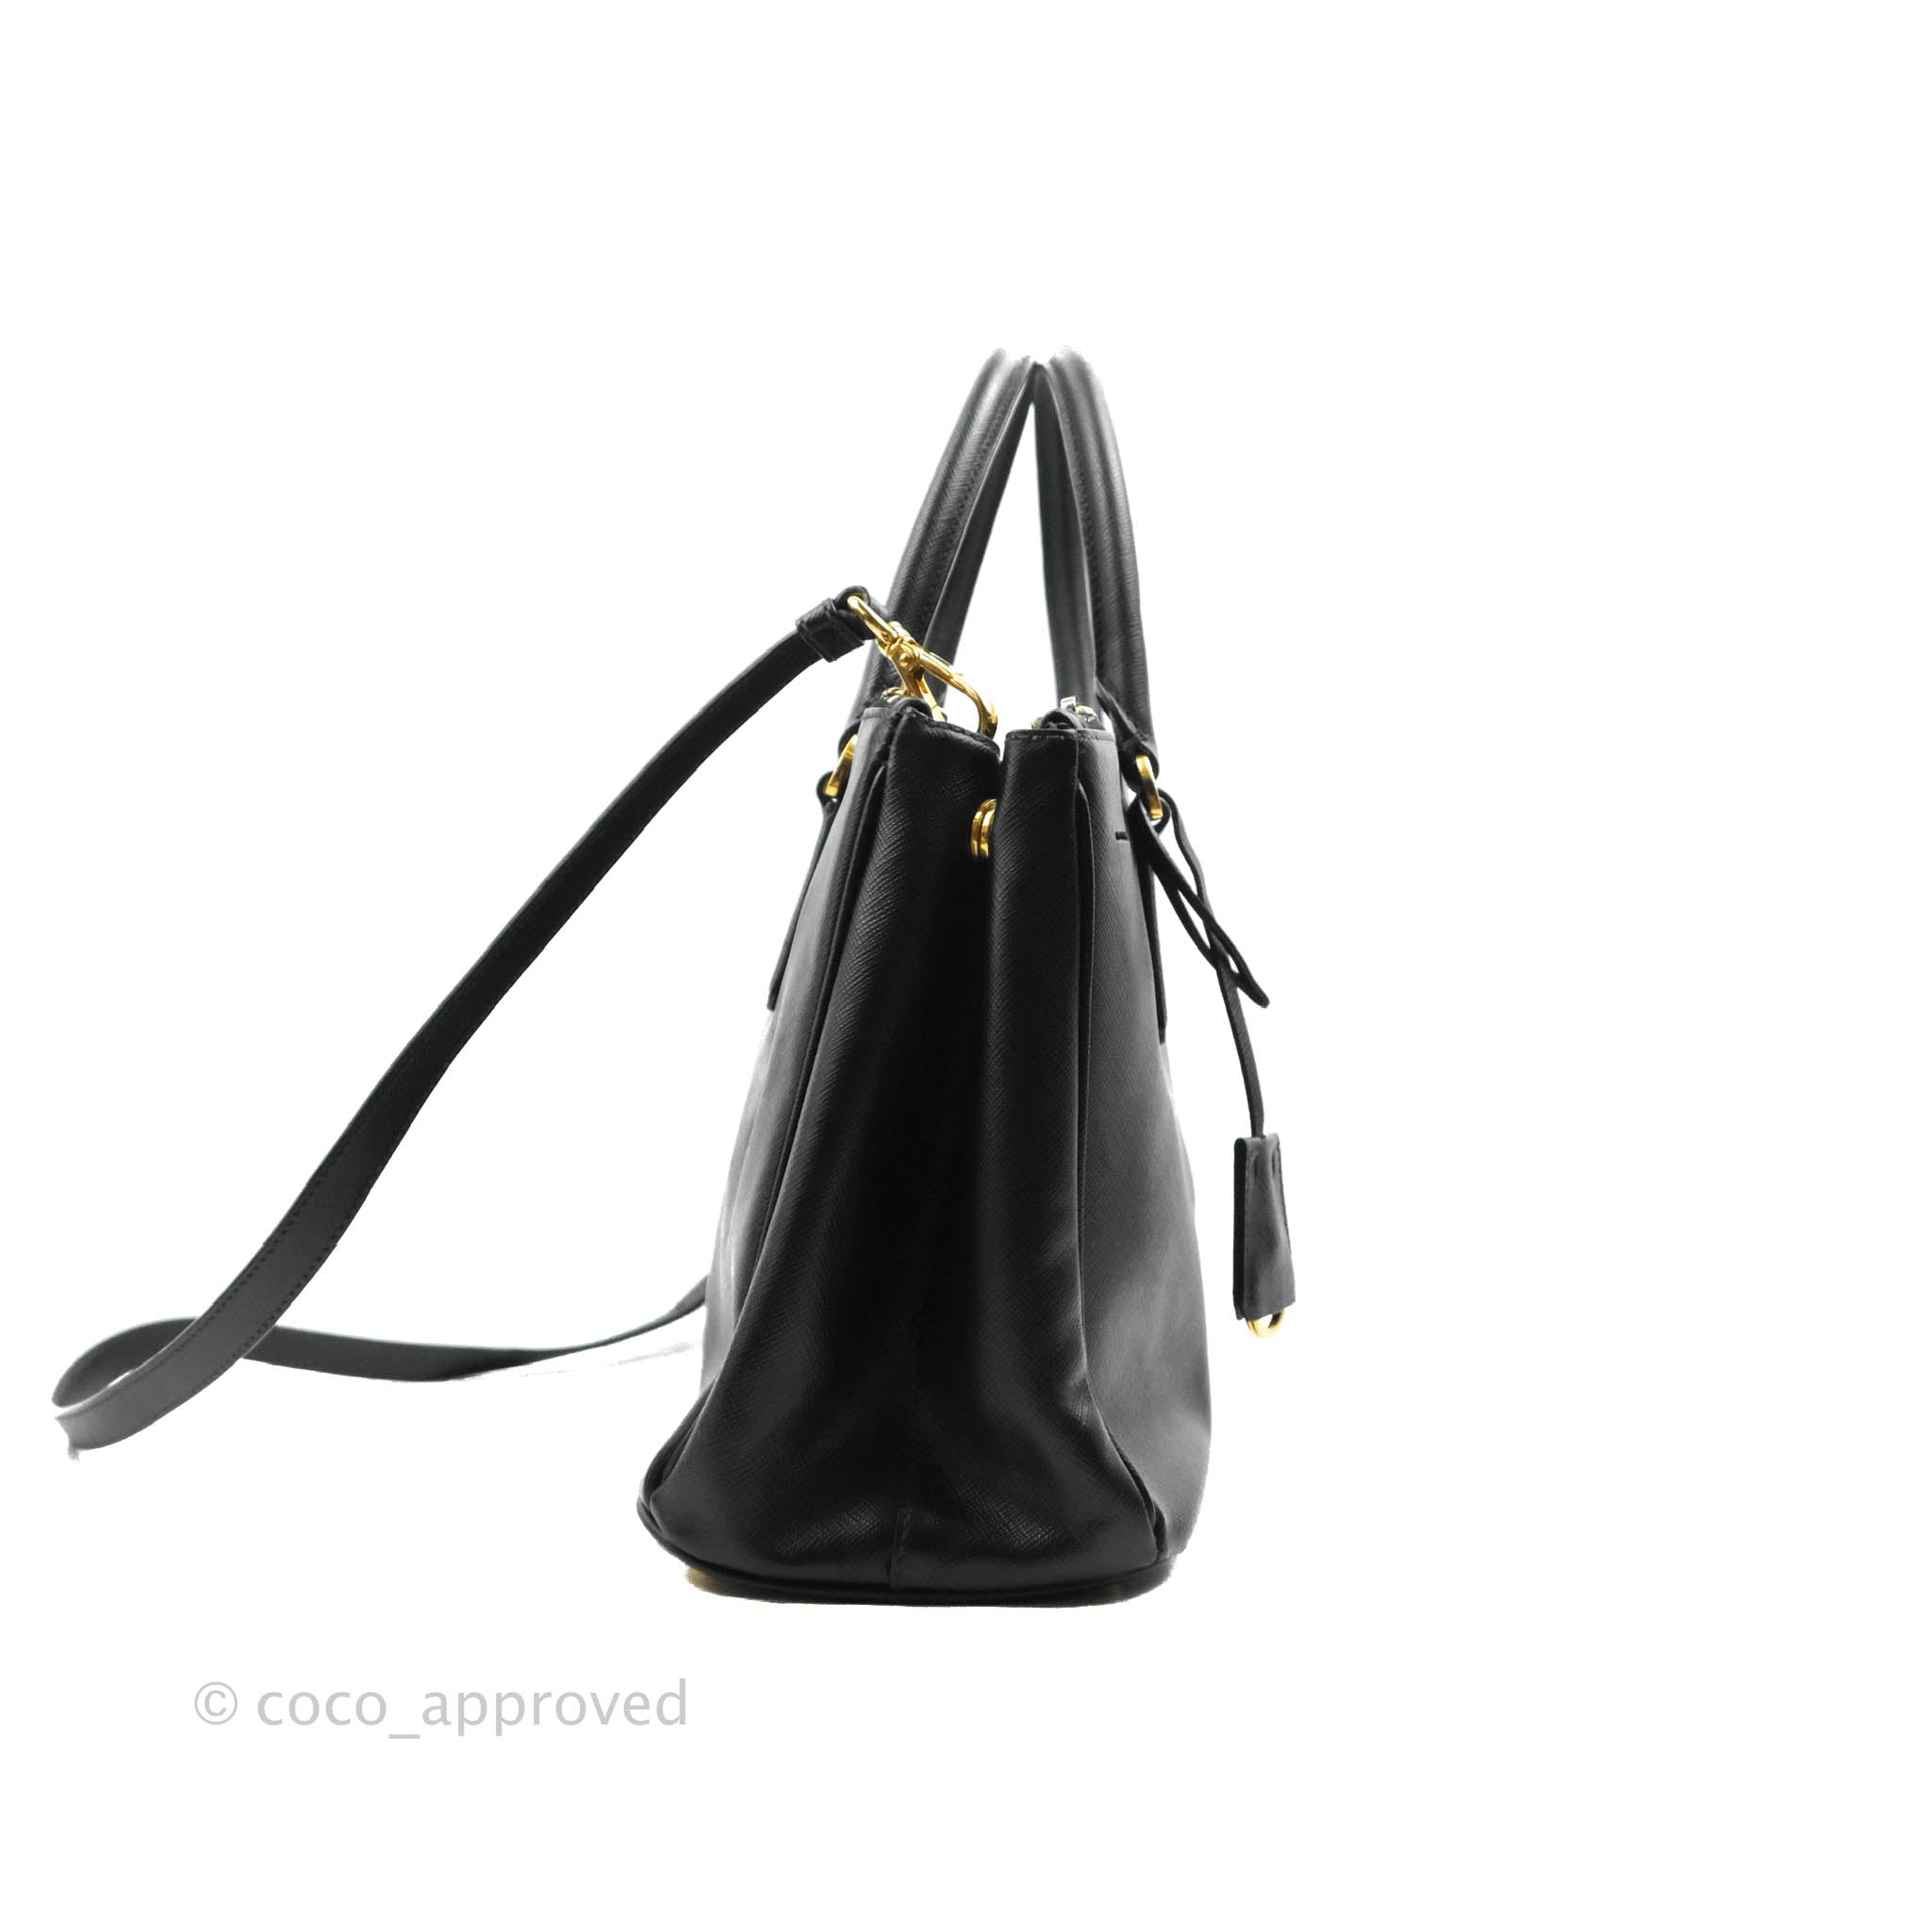 Prada Galleria Double Lux Black Saffiano Leather Zip Satchel